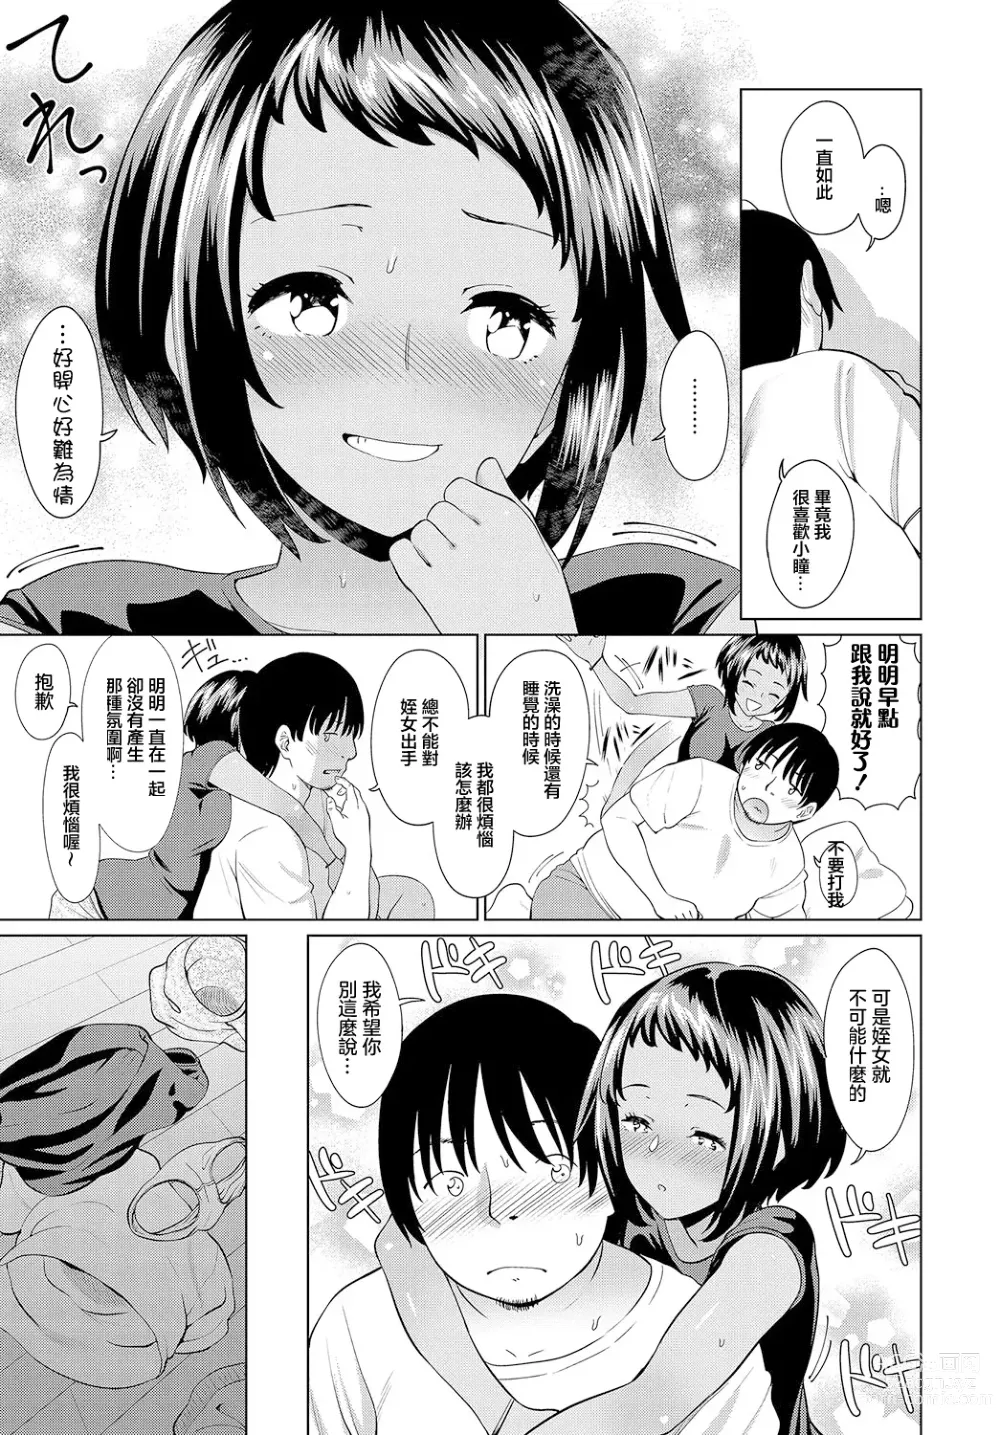 Page 7 of manga Mei no Natsuyasumi